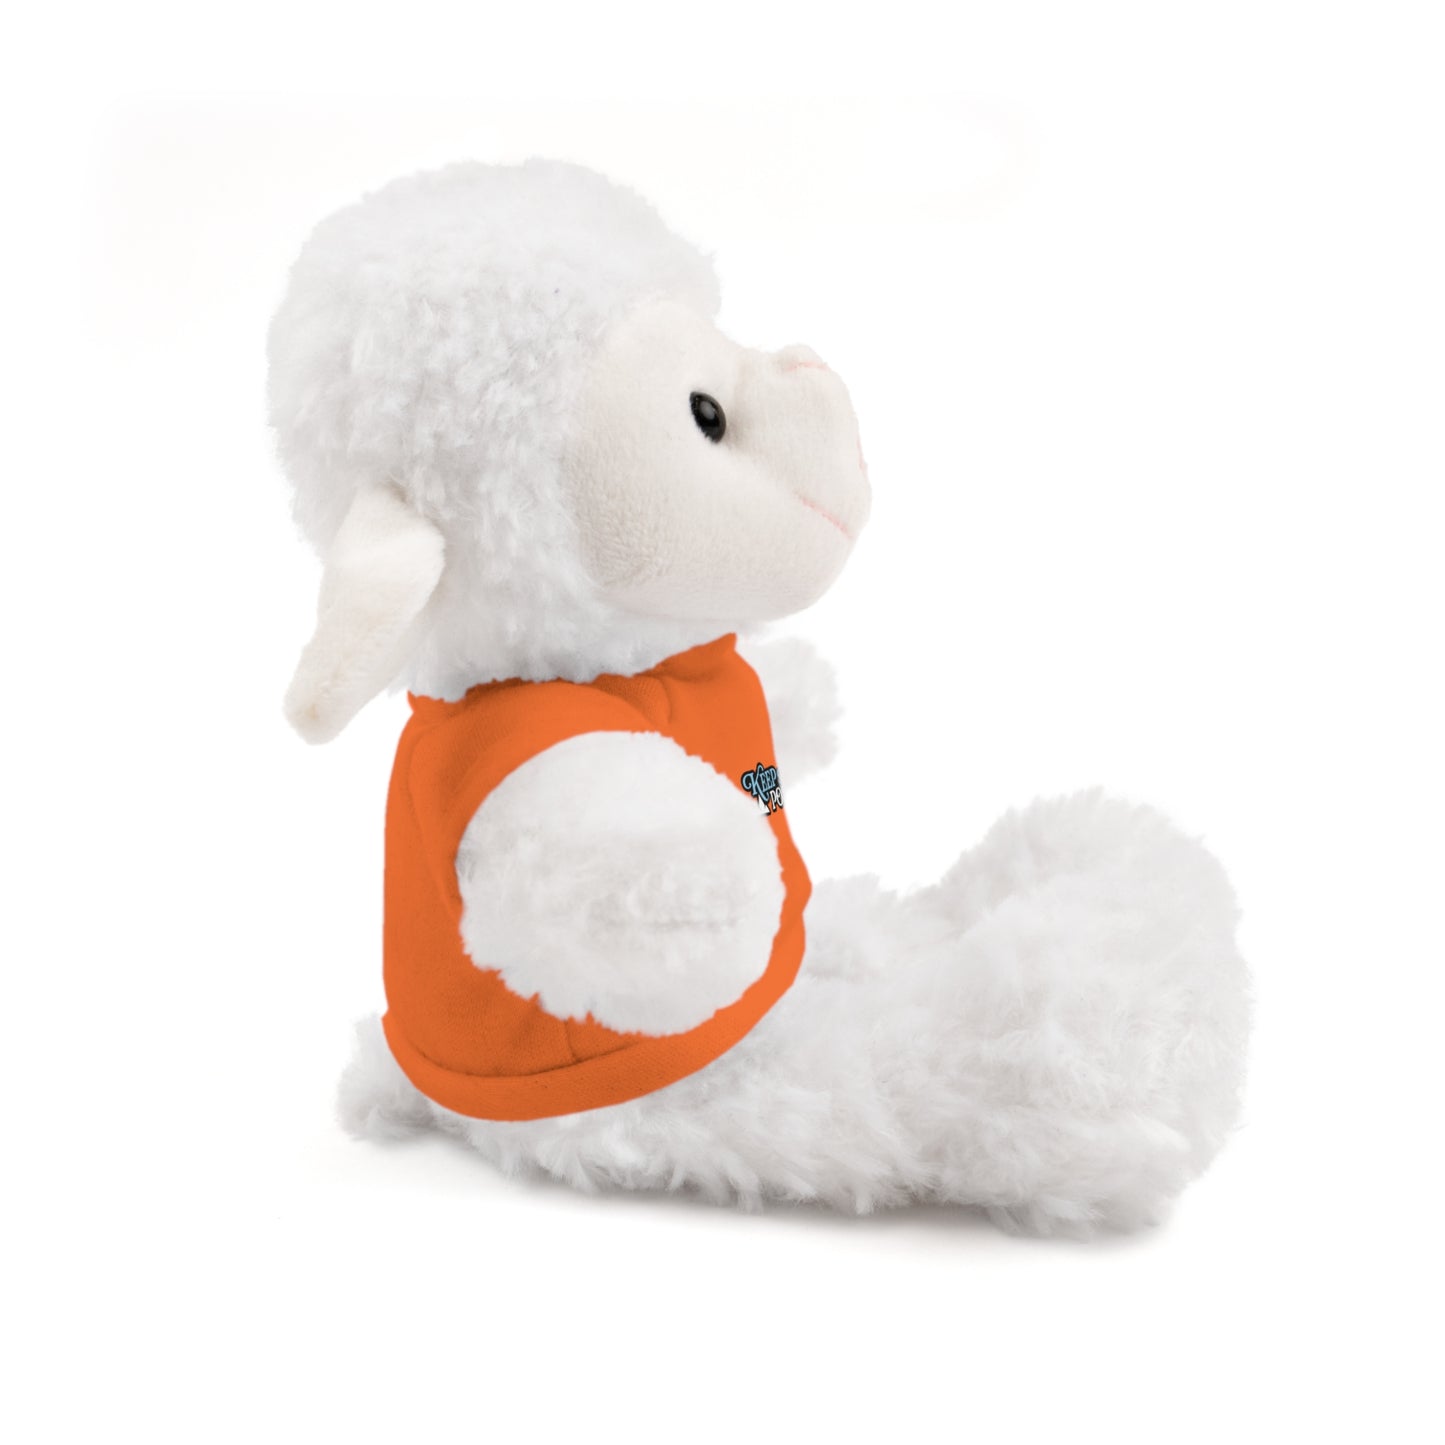 IceMan Keep Spreading Positivity Stuffed Animals with Tee